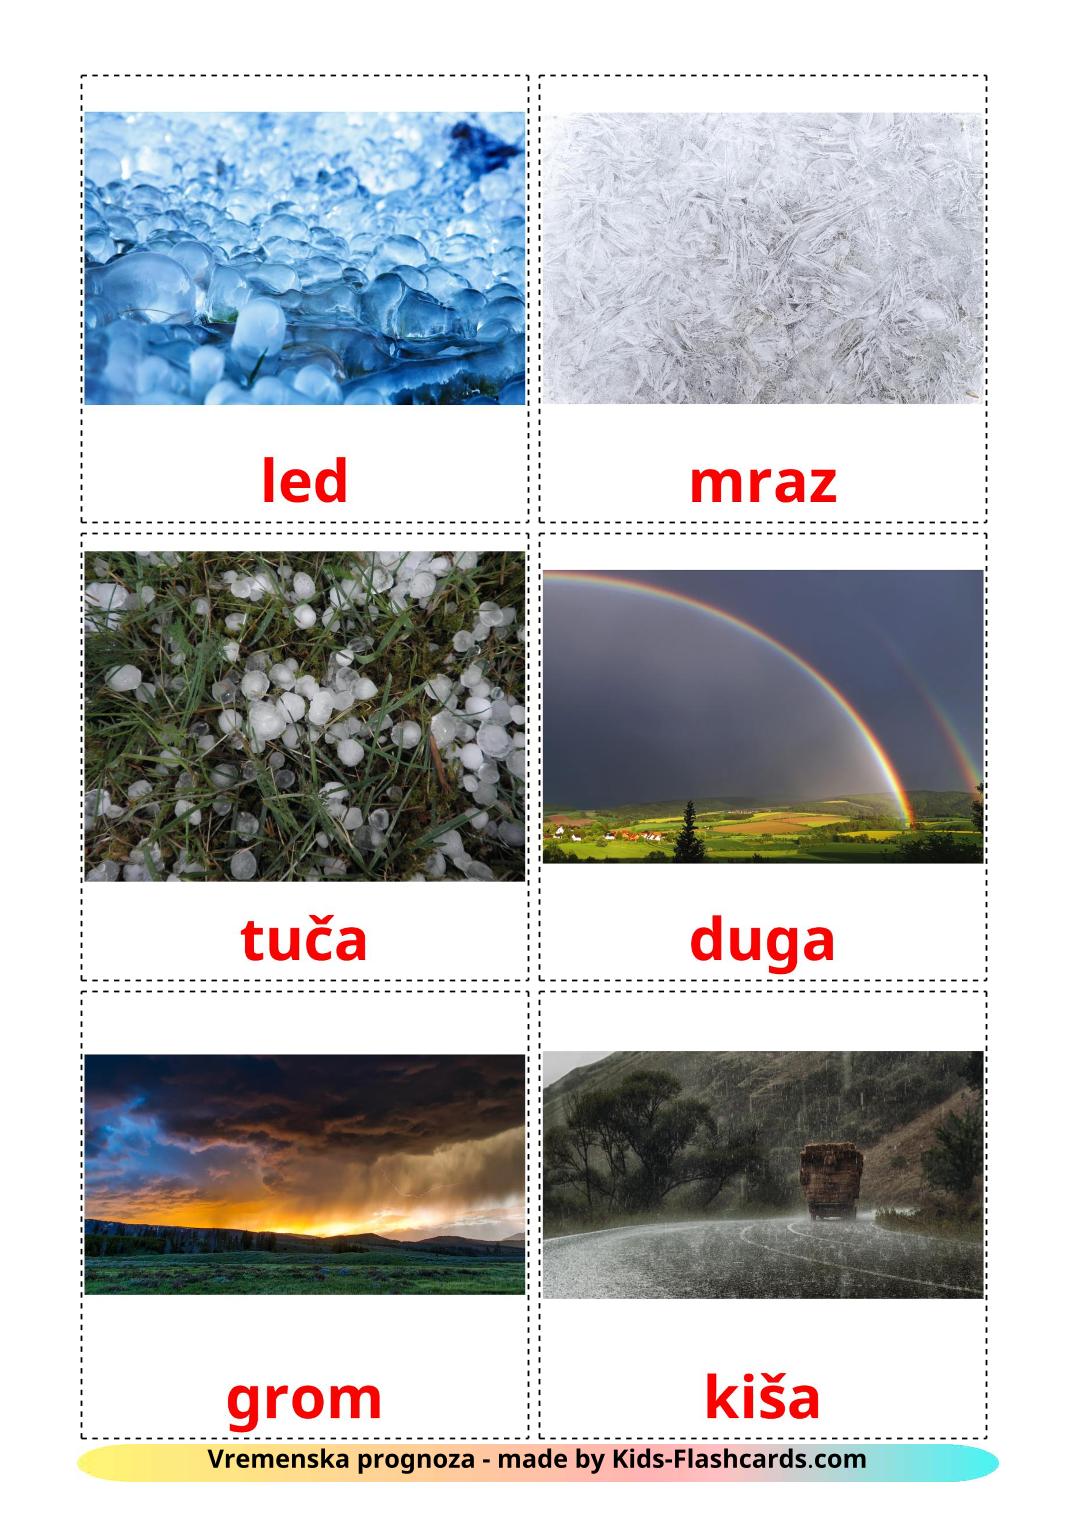 Tempo atmosferico - 31 flashcards bosniaco stampabili gratuitamente